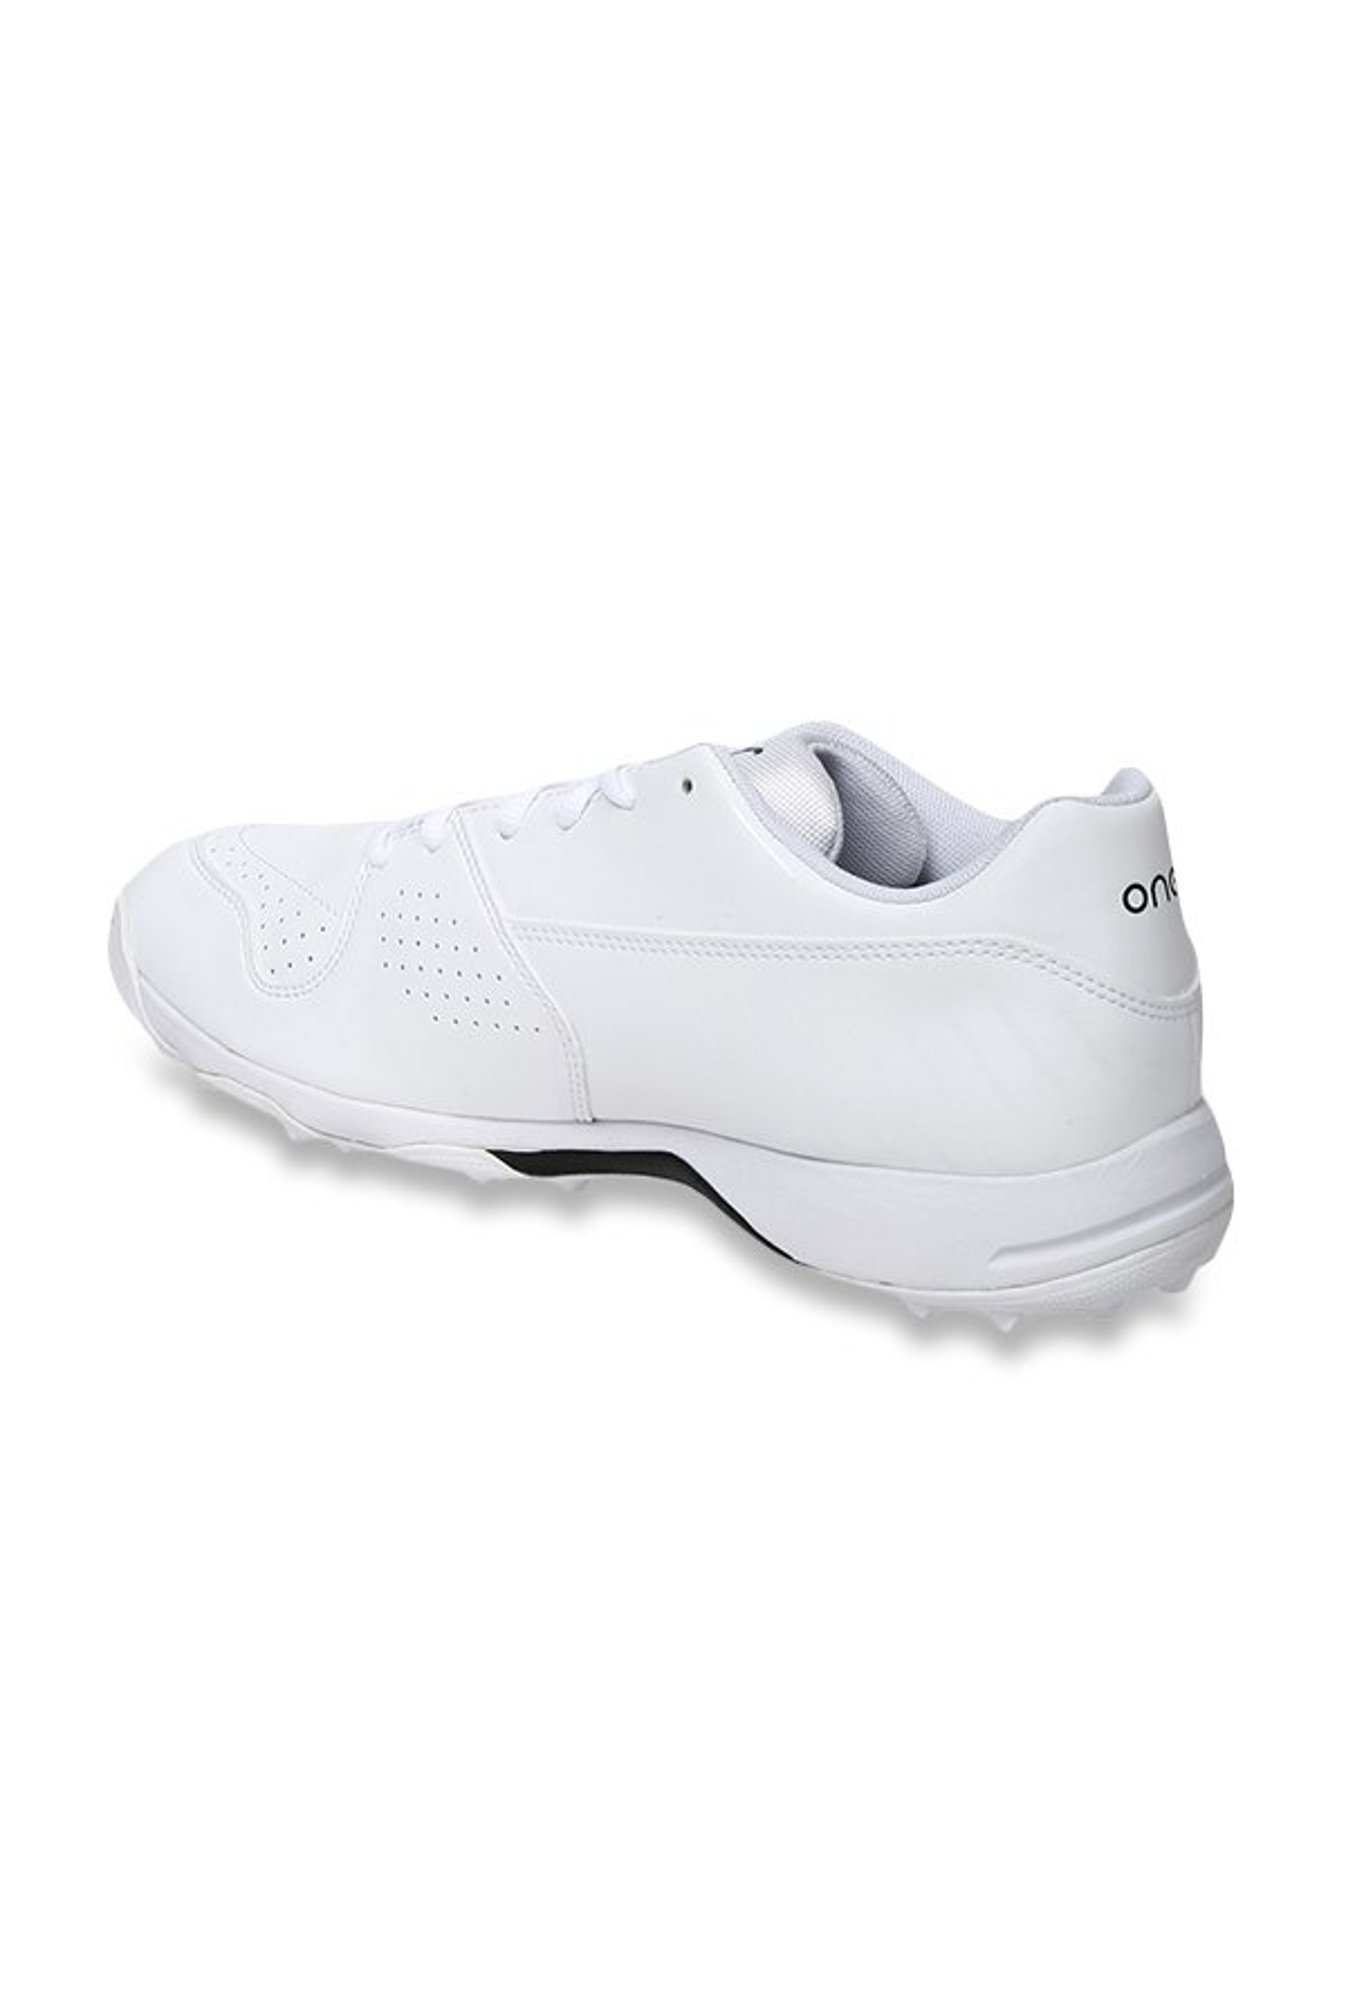 puma men's evospeed one8 r white cricket shoes